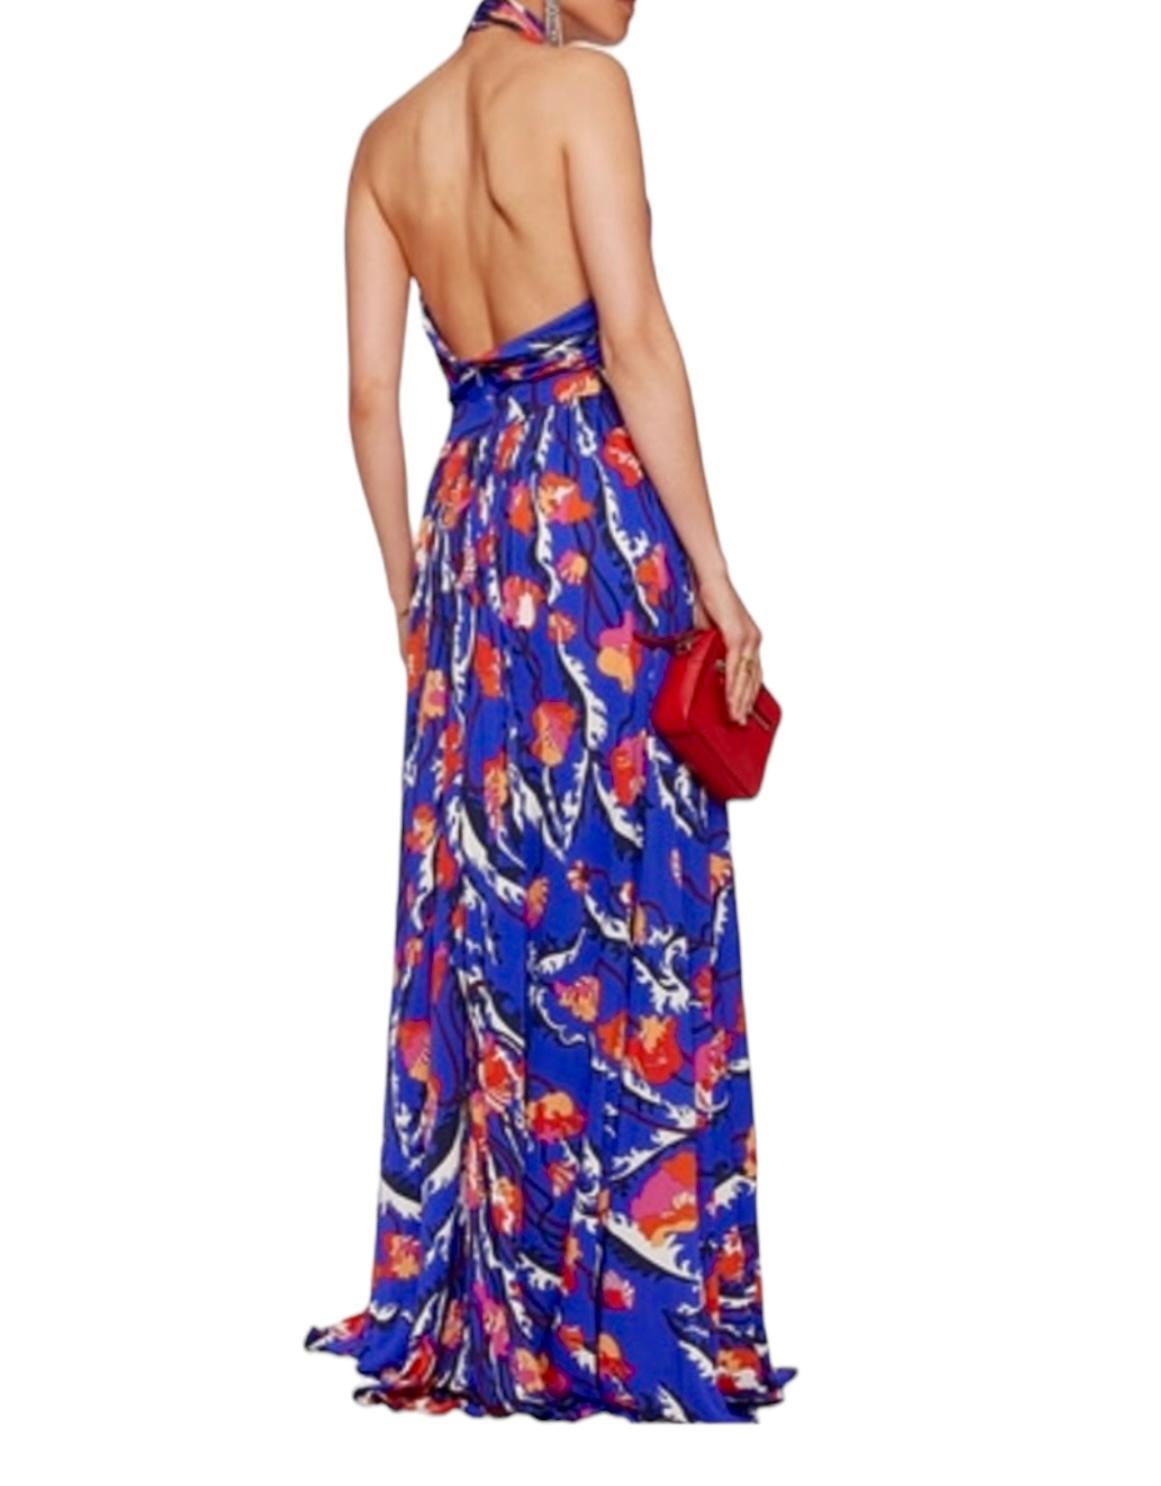 NEW Emilio Pucci Signature Print  Neckholder Maxi Dress Gown 42 For Sale 8